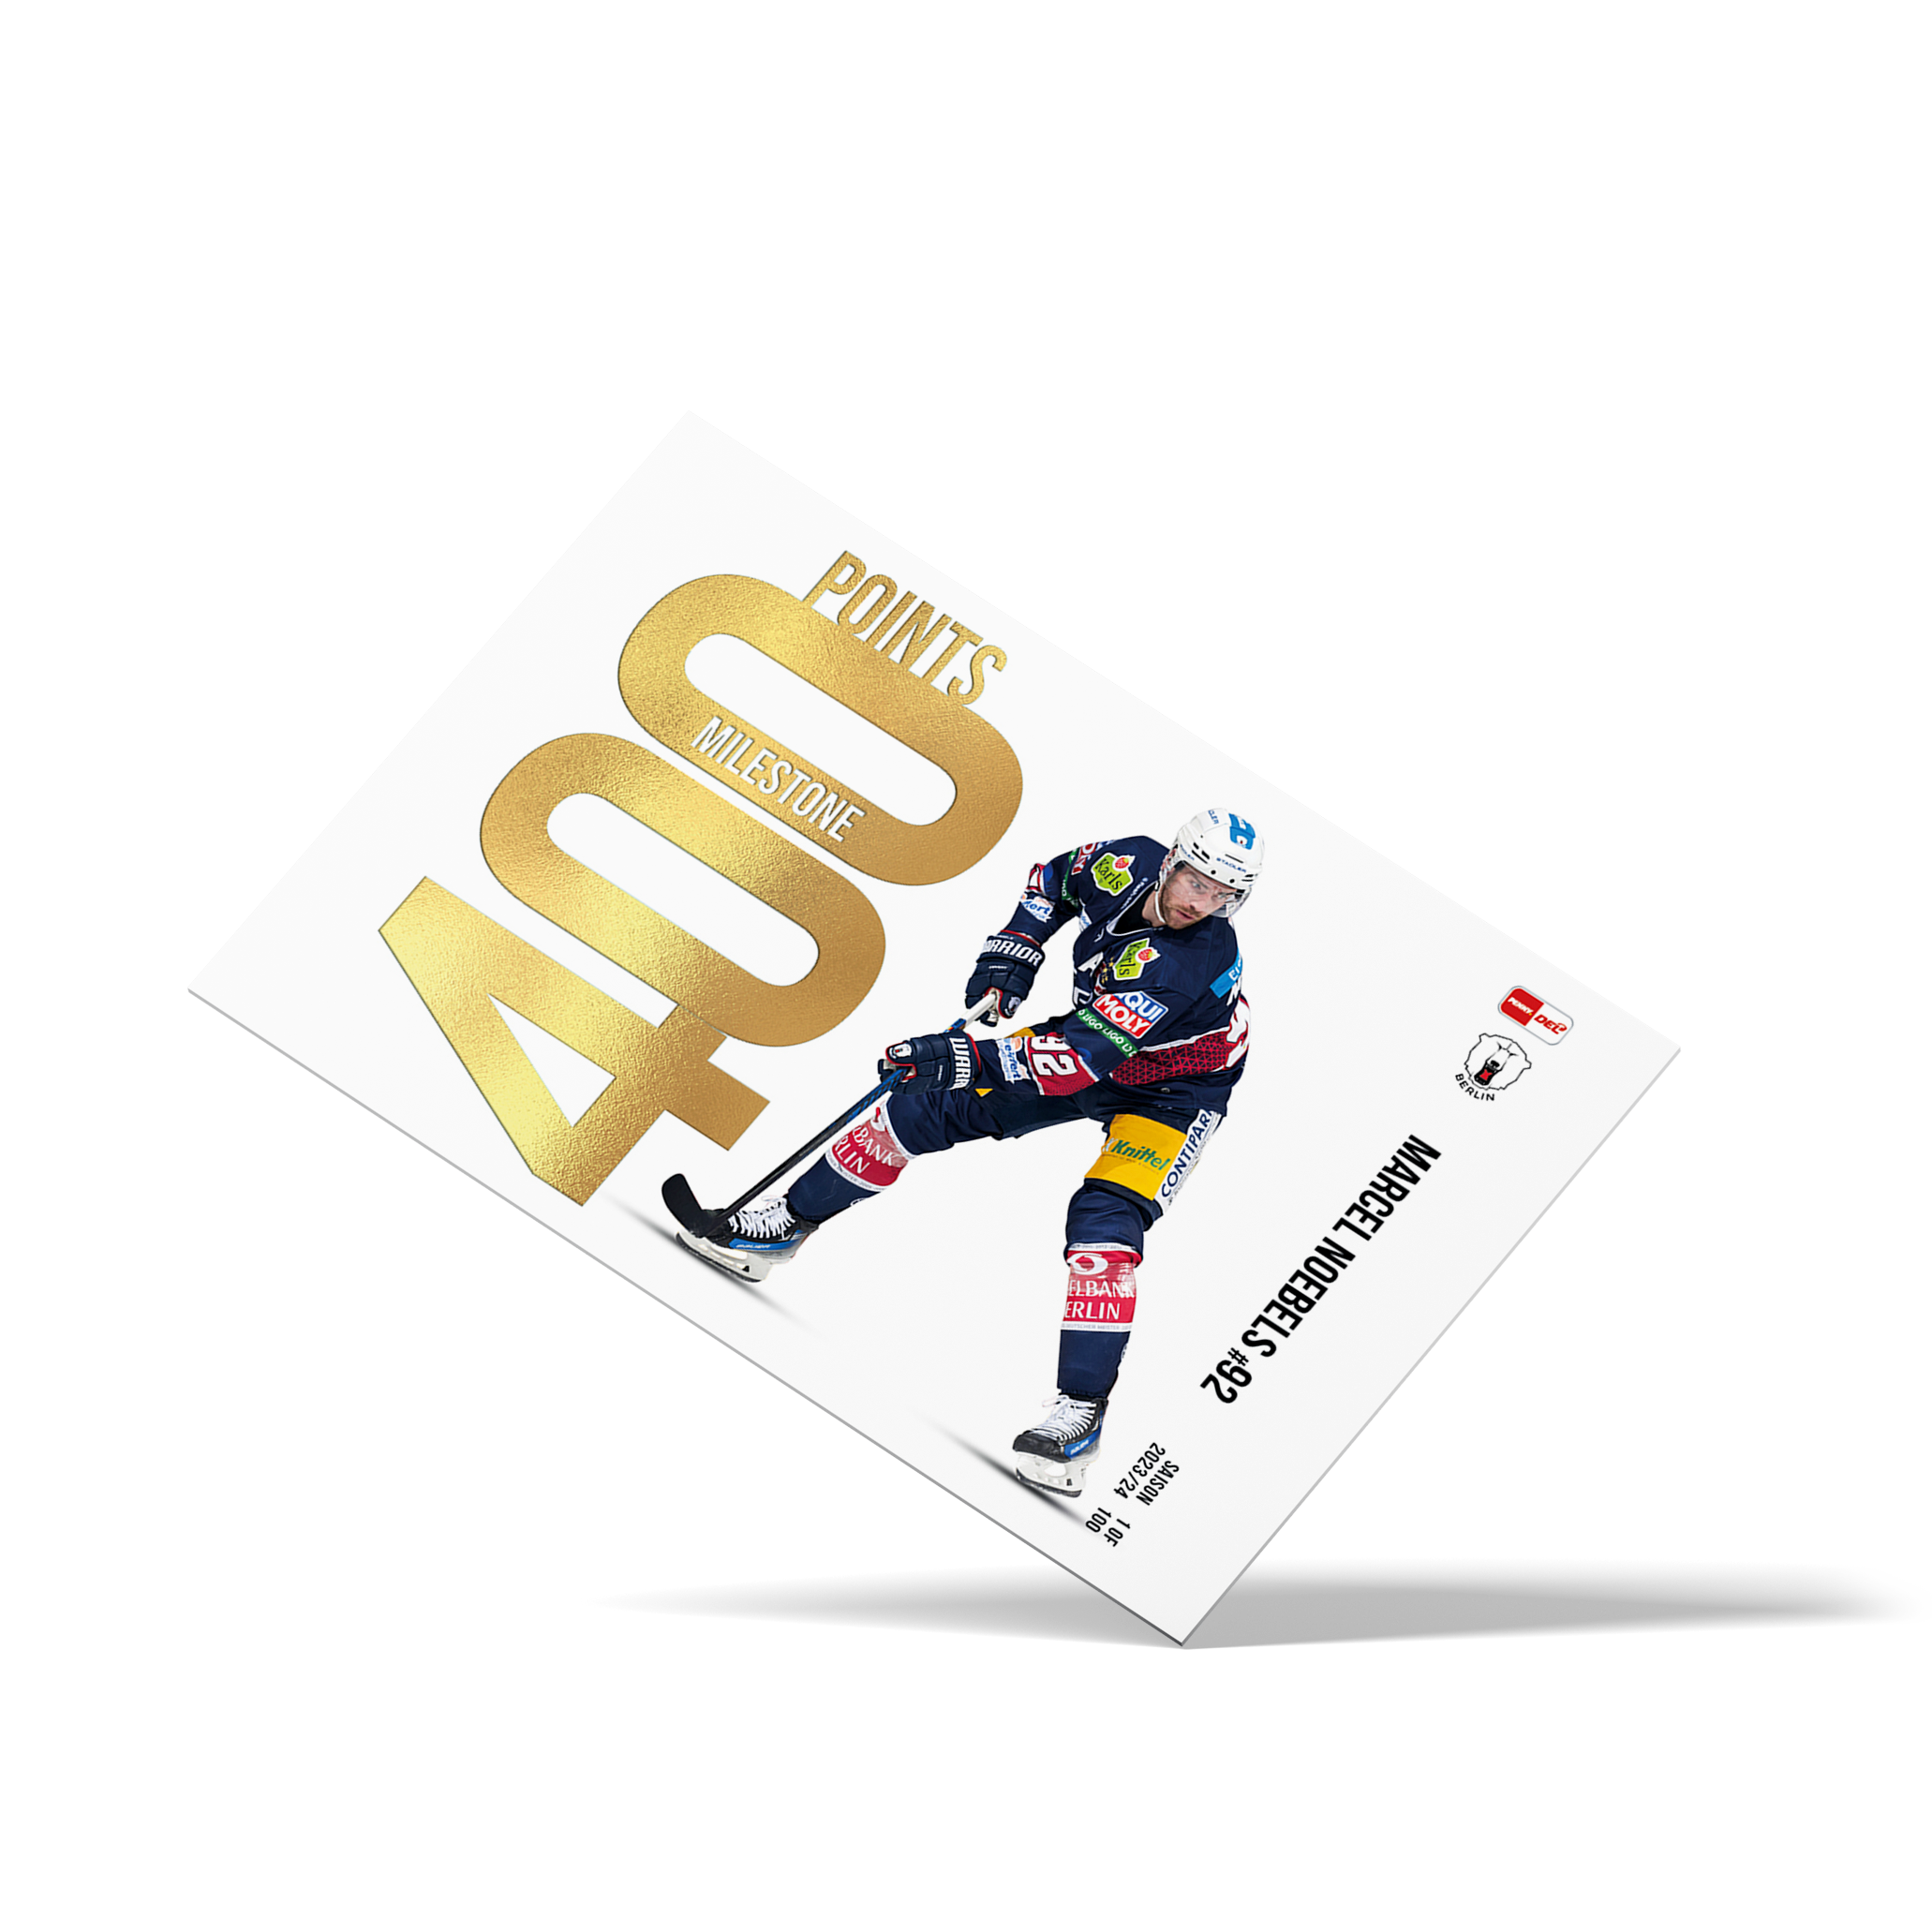 MILESTONE - 400 Points - Marcel Noebels